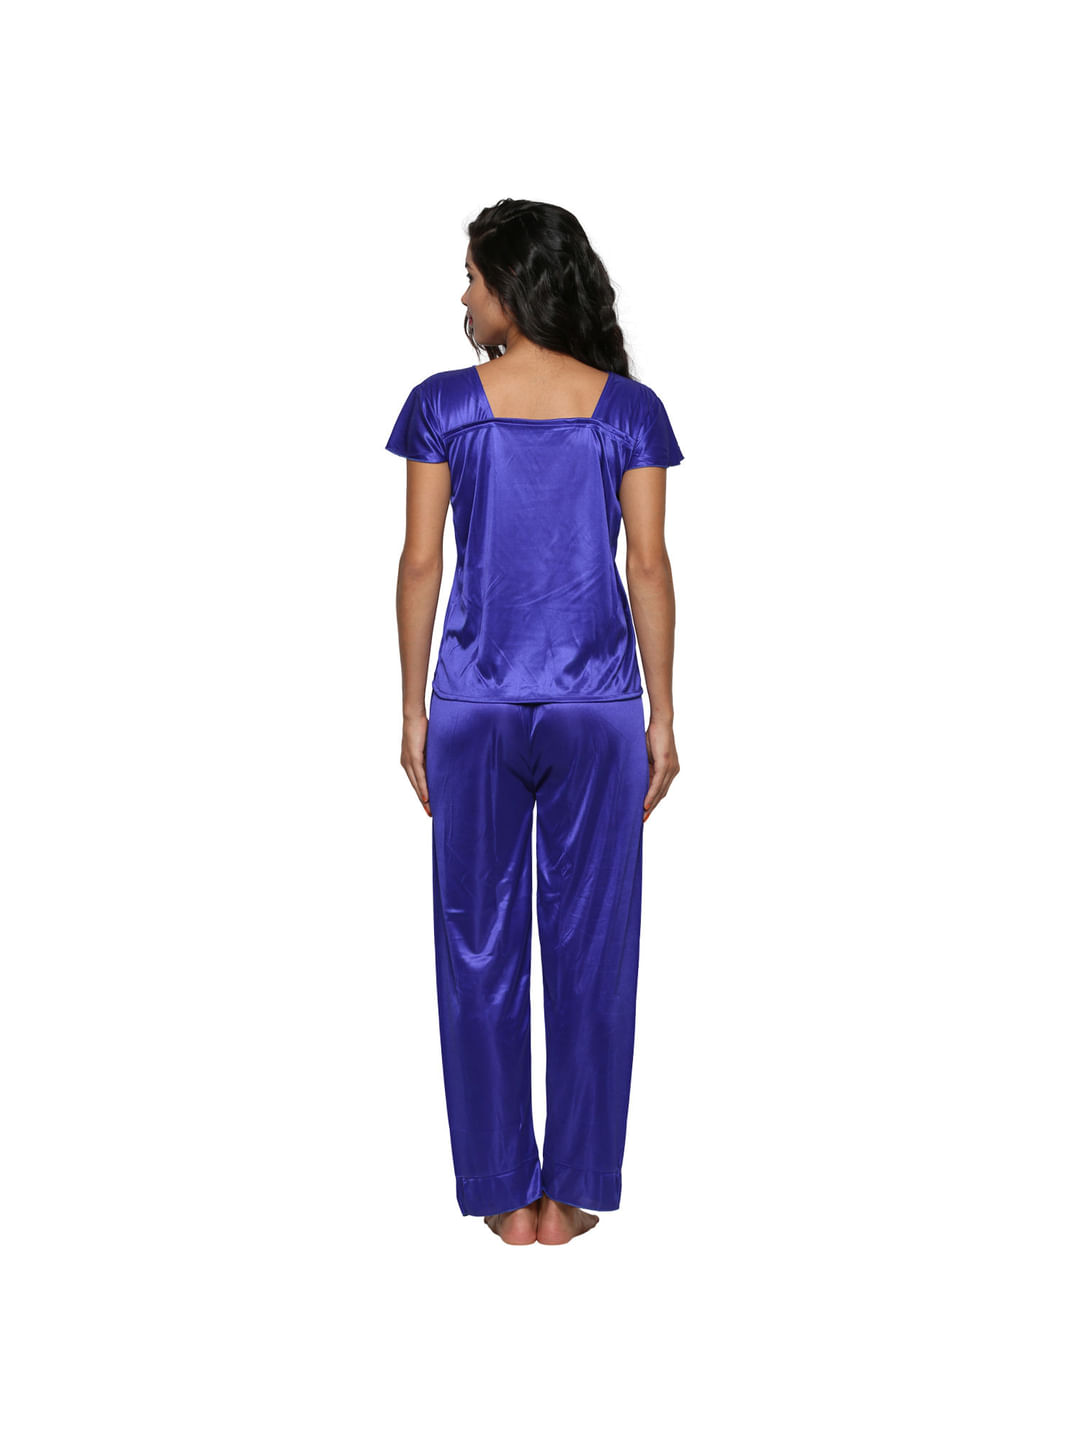 Satin Blue Nighty, Nightdress Set Of 4 (Free Size, BI-19-Purple-FS)